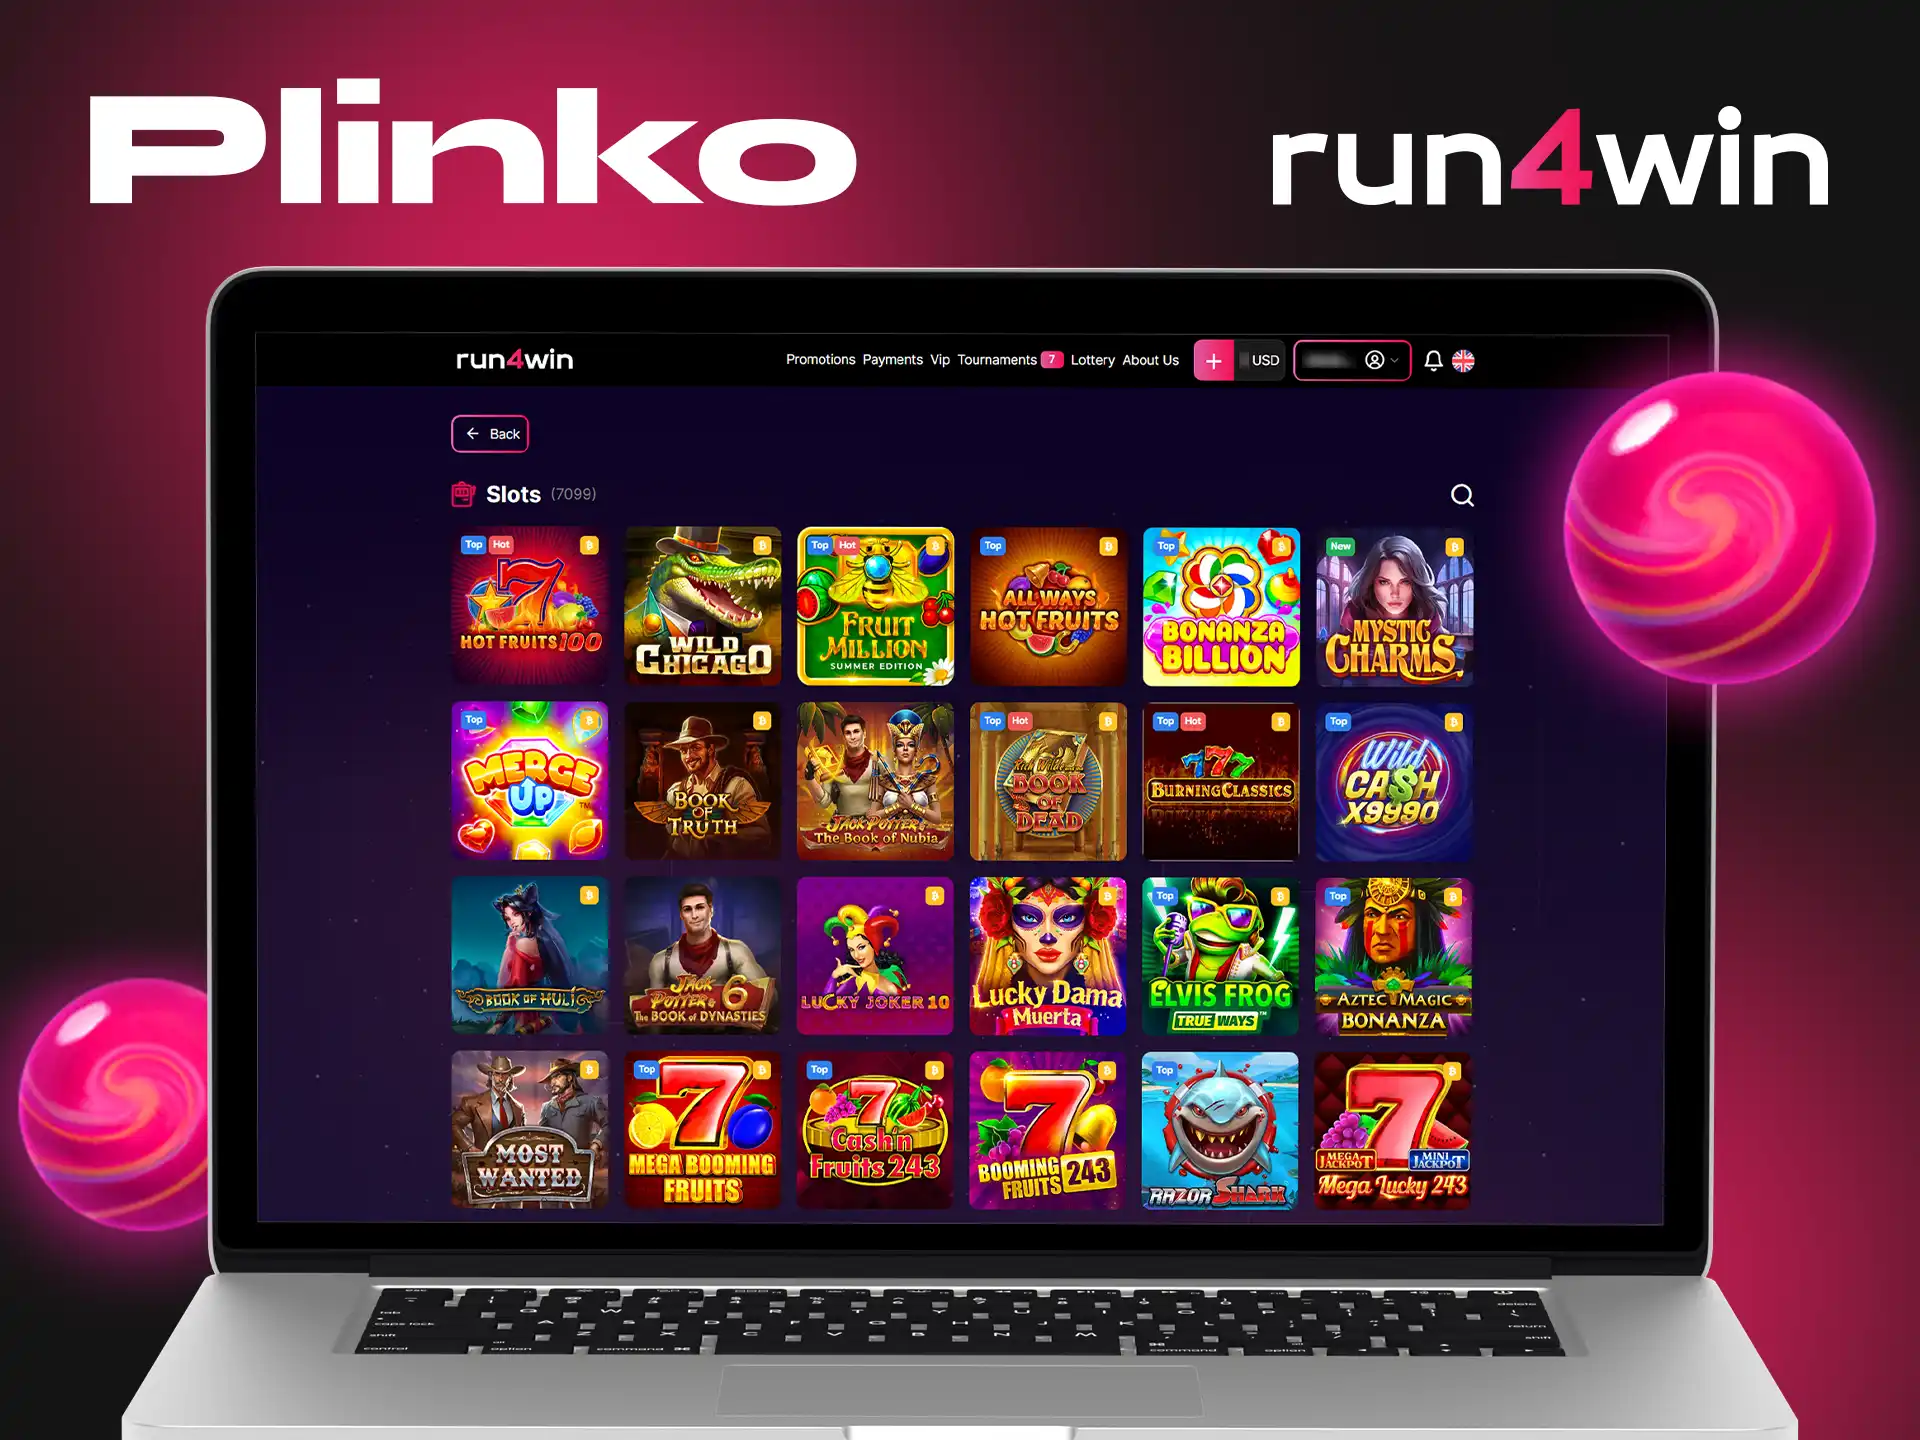 Run4Win offers to play the popular Plinko casino game.